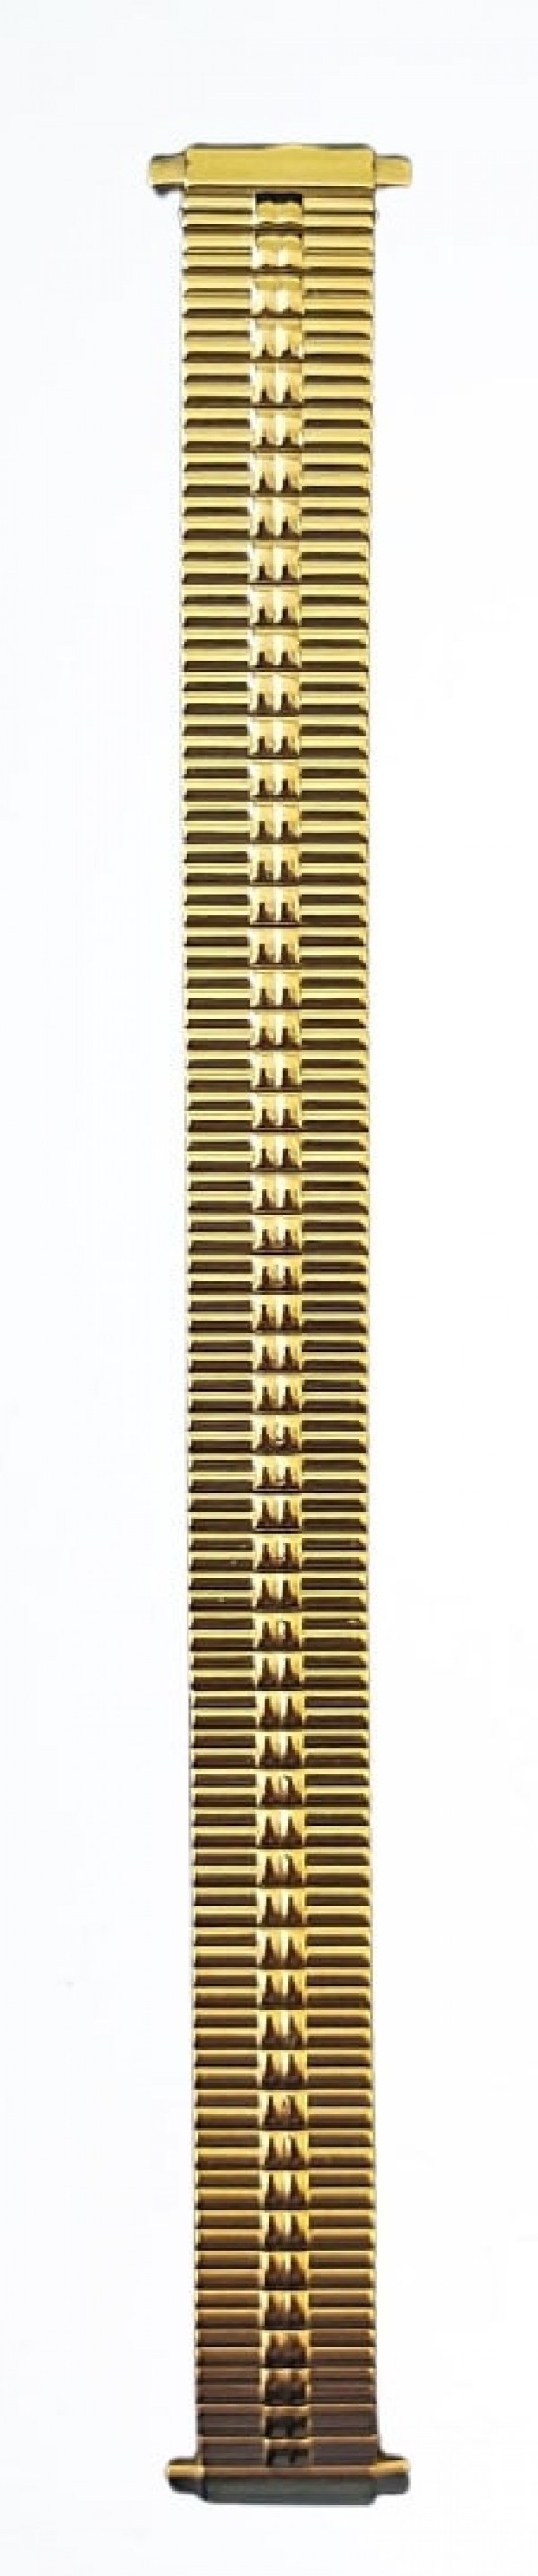 Metalni kaiš - MK12-16.25 Zlatni rastegljivi 12-16mm